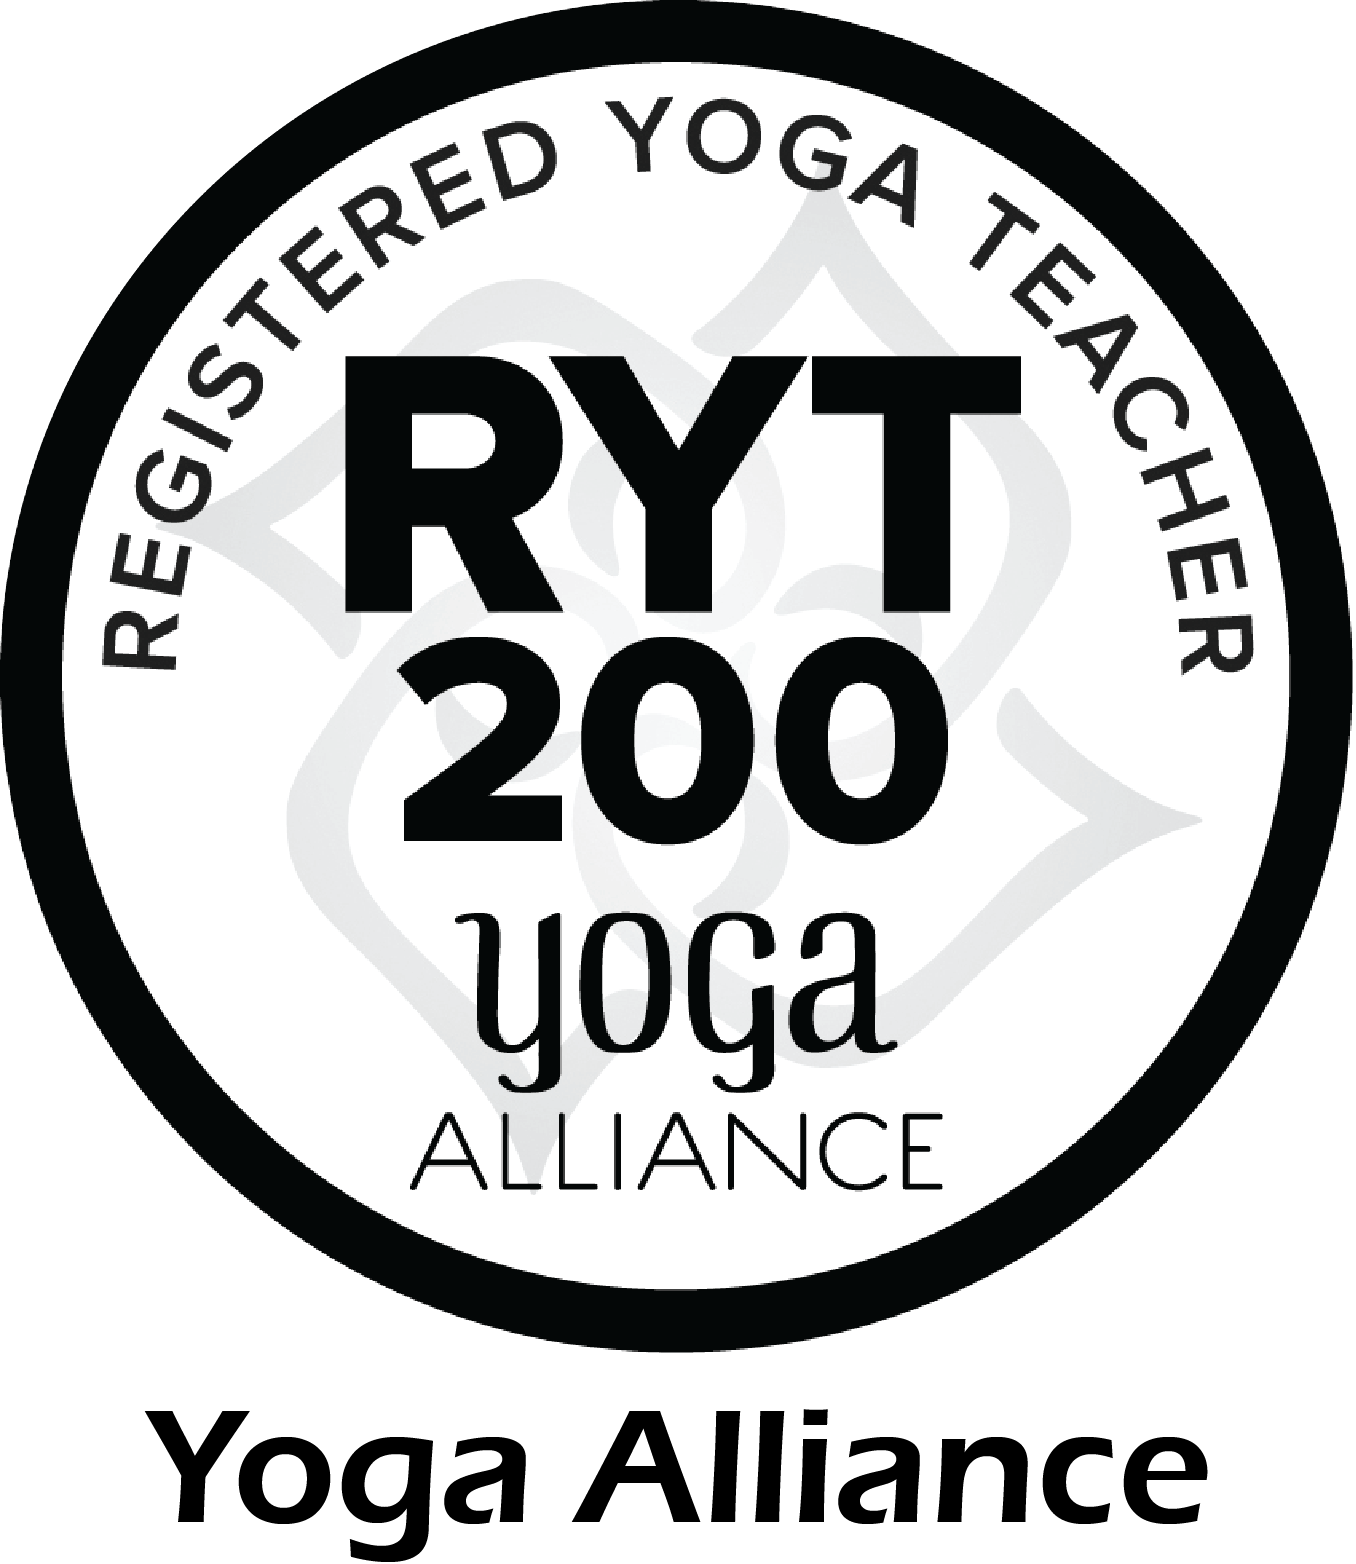 Yoga Alliance Ryt 200 Registered Yoga Teacher - Yoga Alliance (1356x1564)